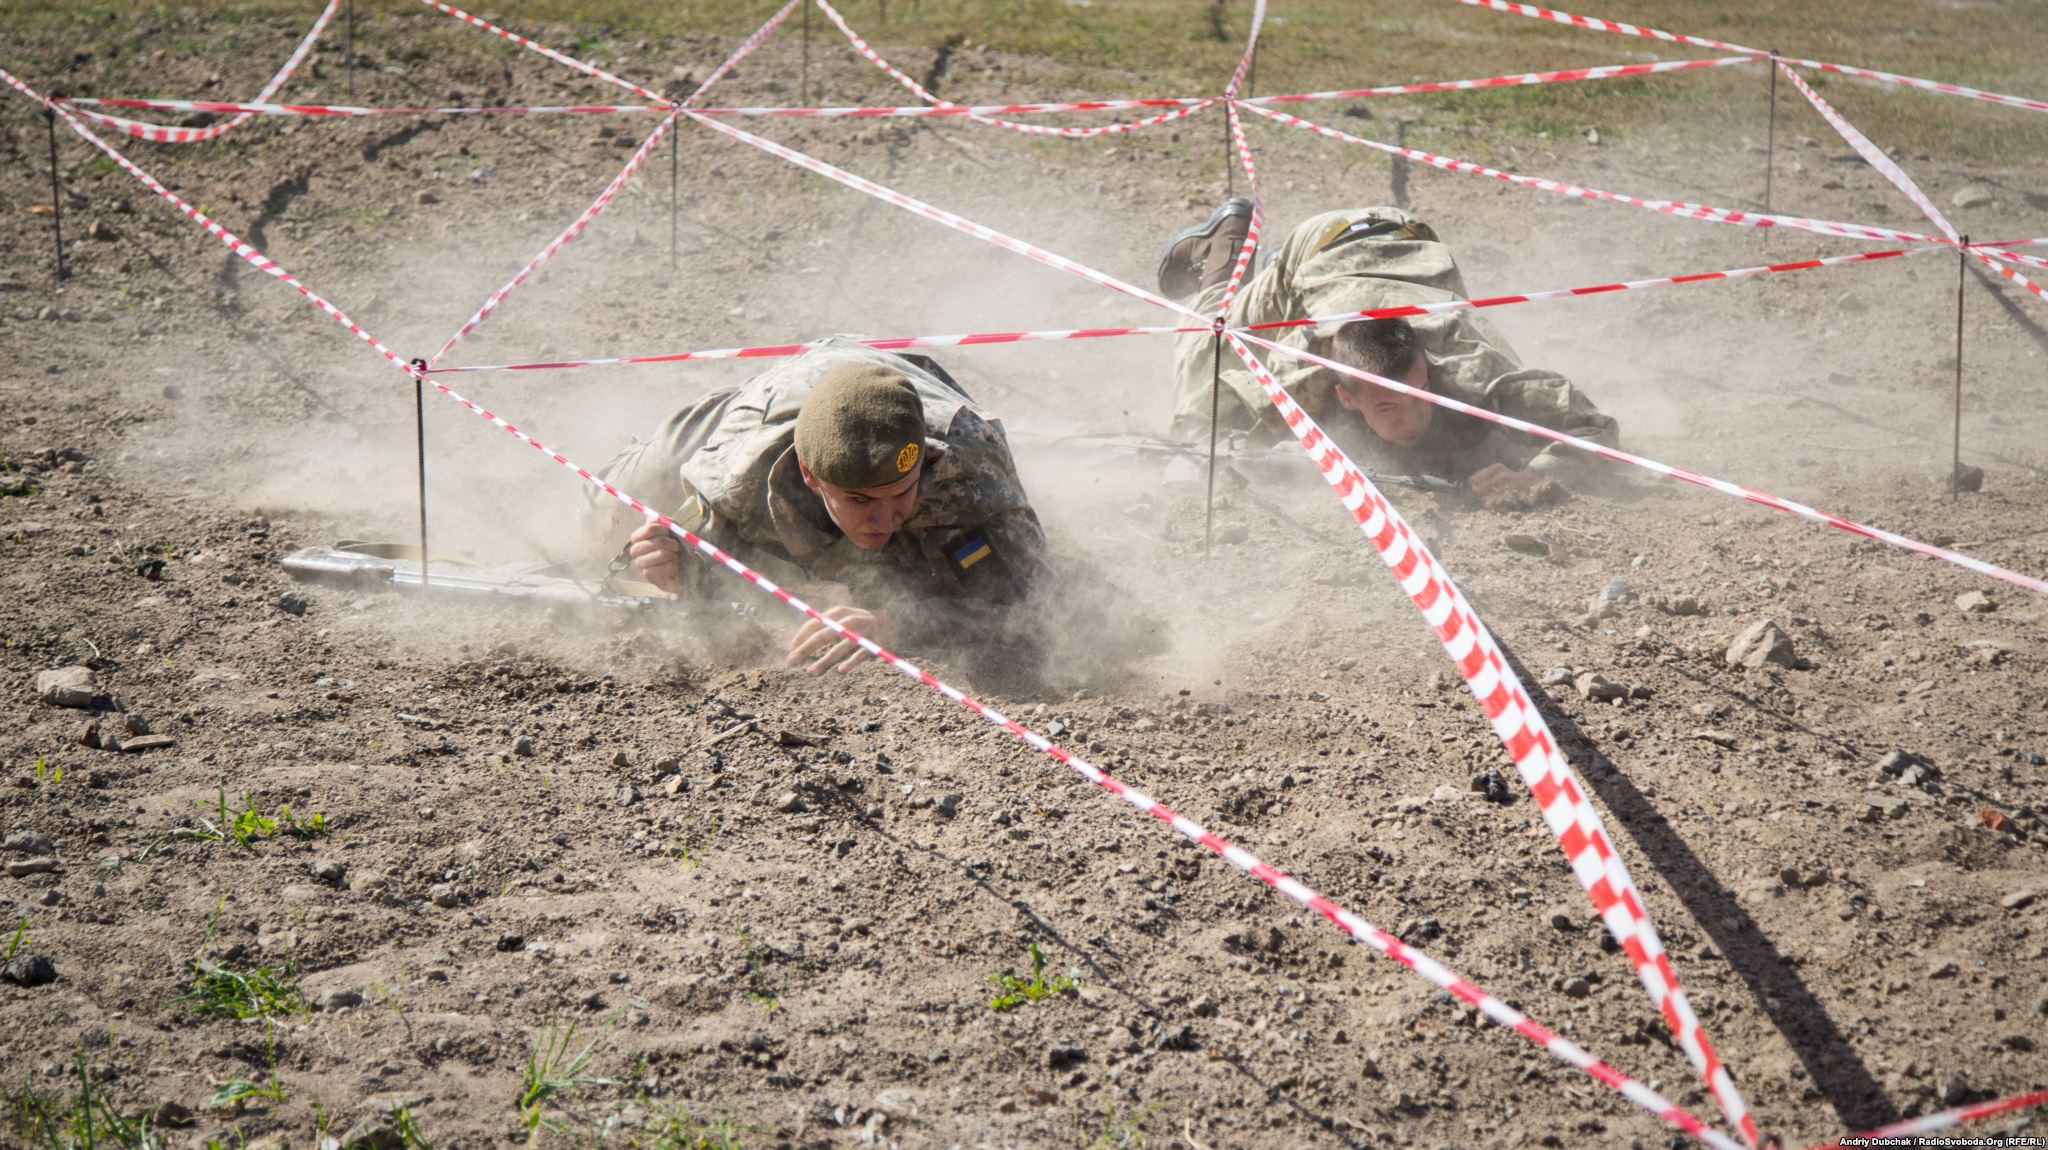  Військова естафета: подолання смуги перешкод (фотограф Данило Дубчак / Danylo Dubchak)